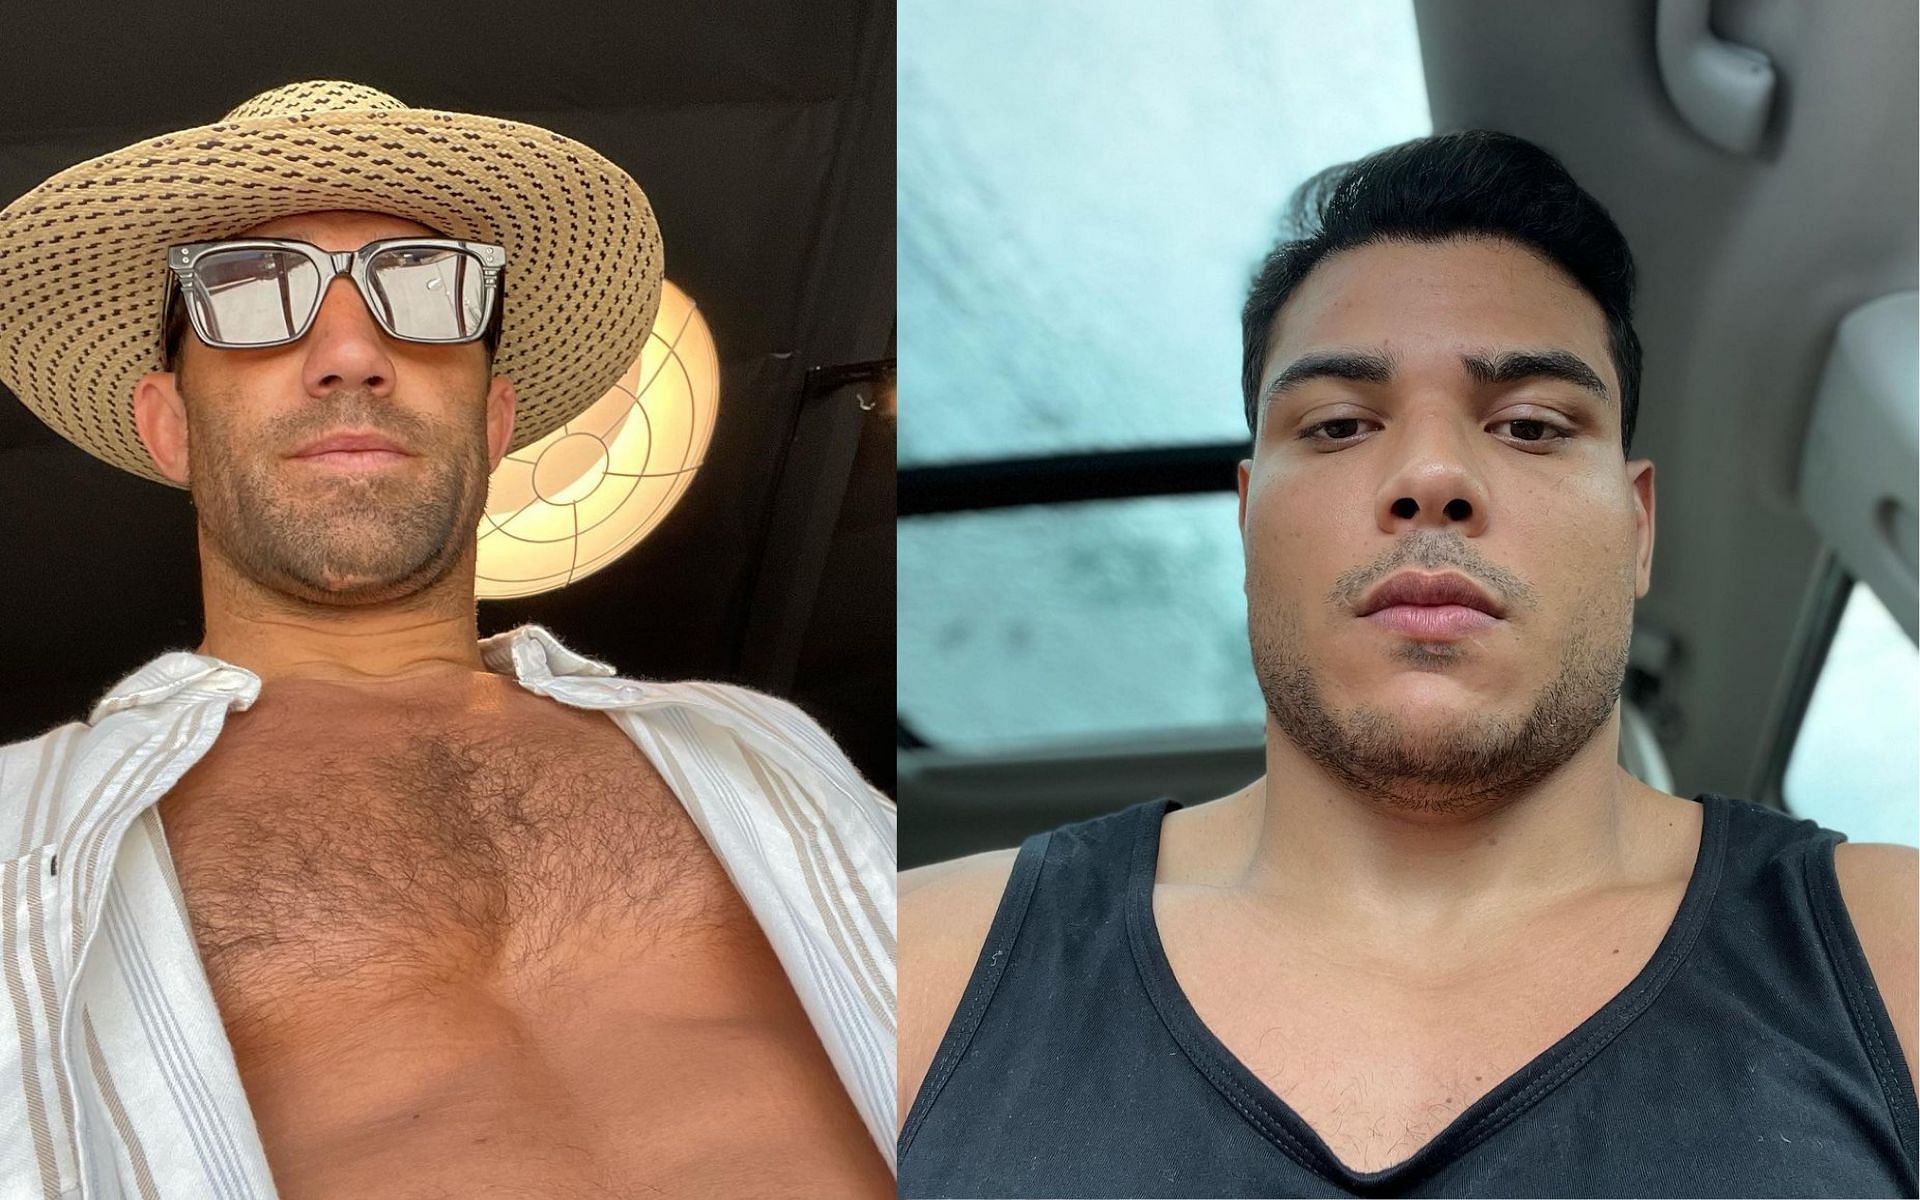 Luke Rockhold (left) and Paulo Costa (right) [Images courtesy @lukerockhold and @borrachinhamma on Instagram]